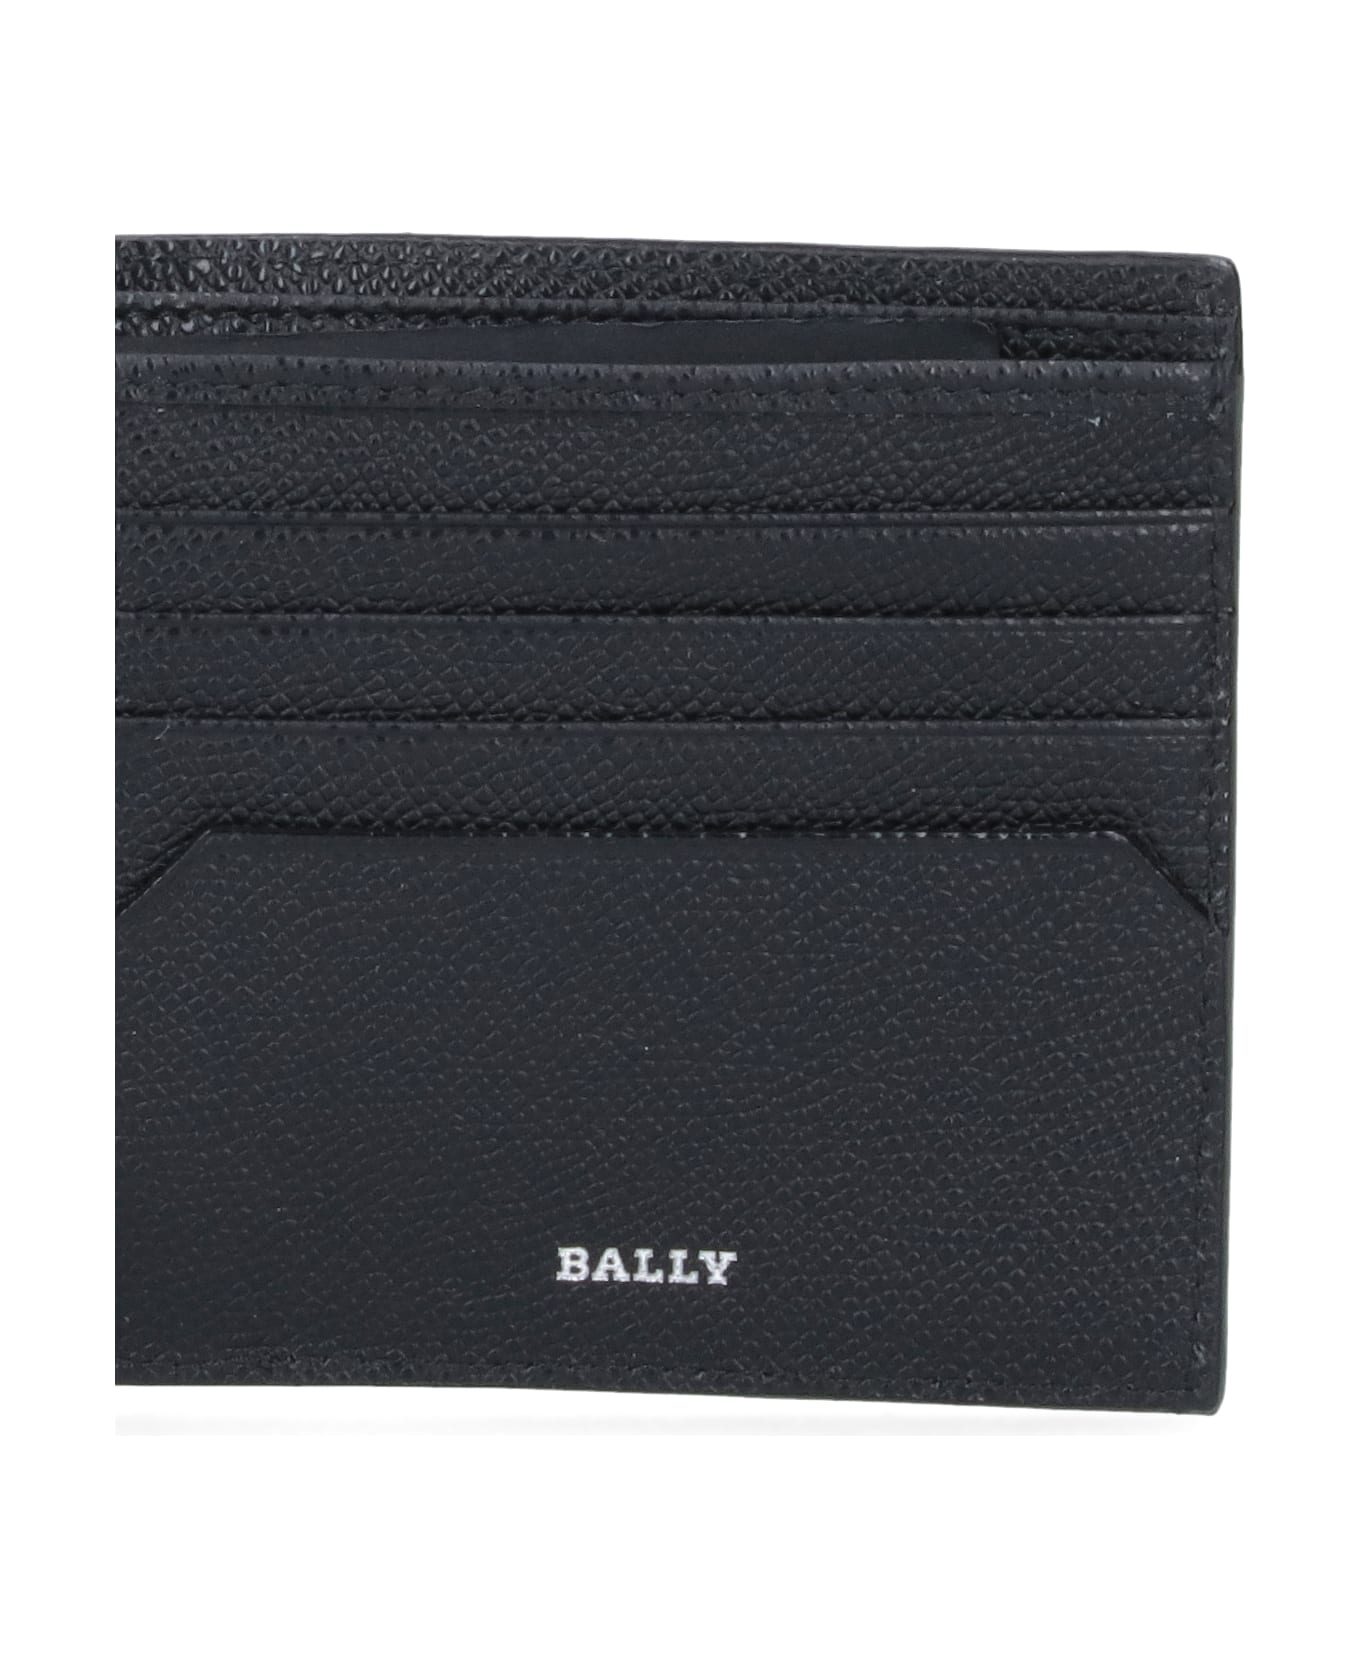 Bally Logo Wallet - Black   財布